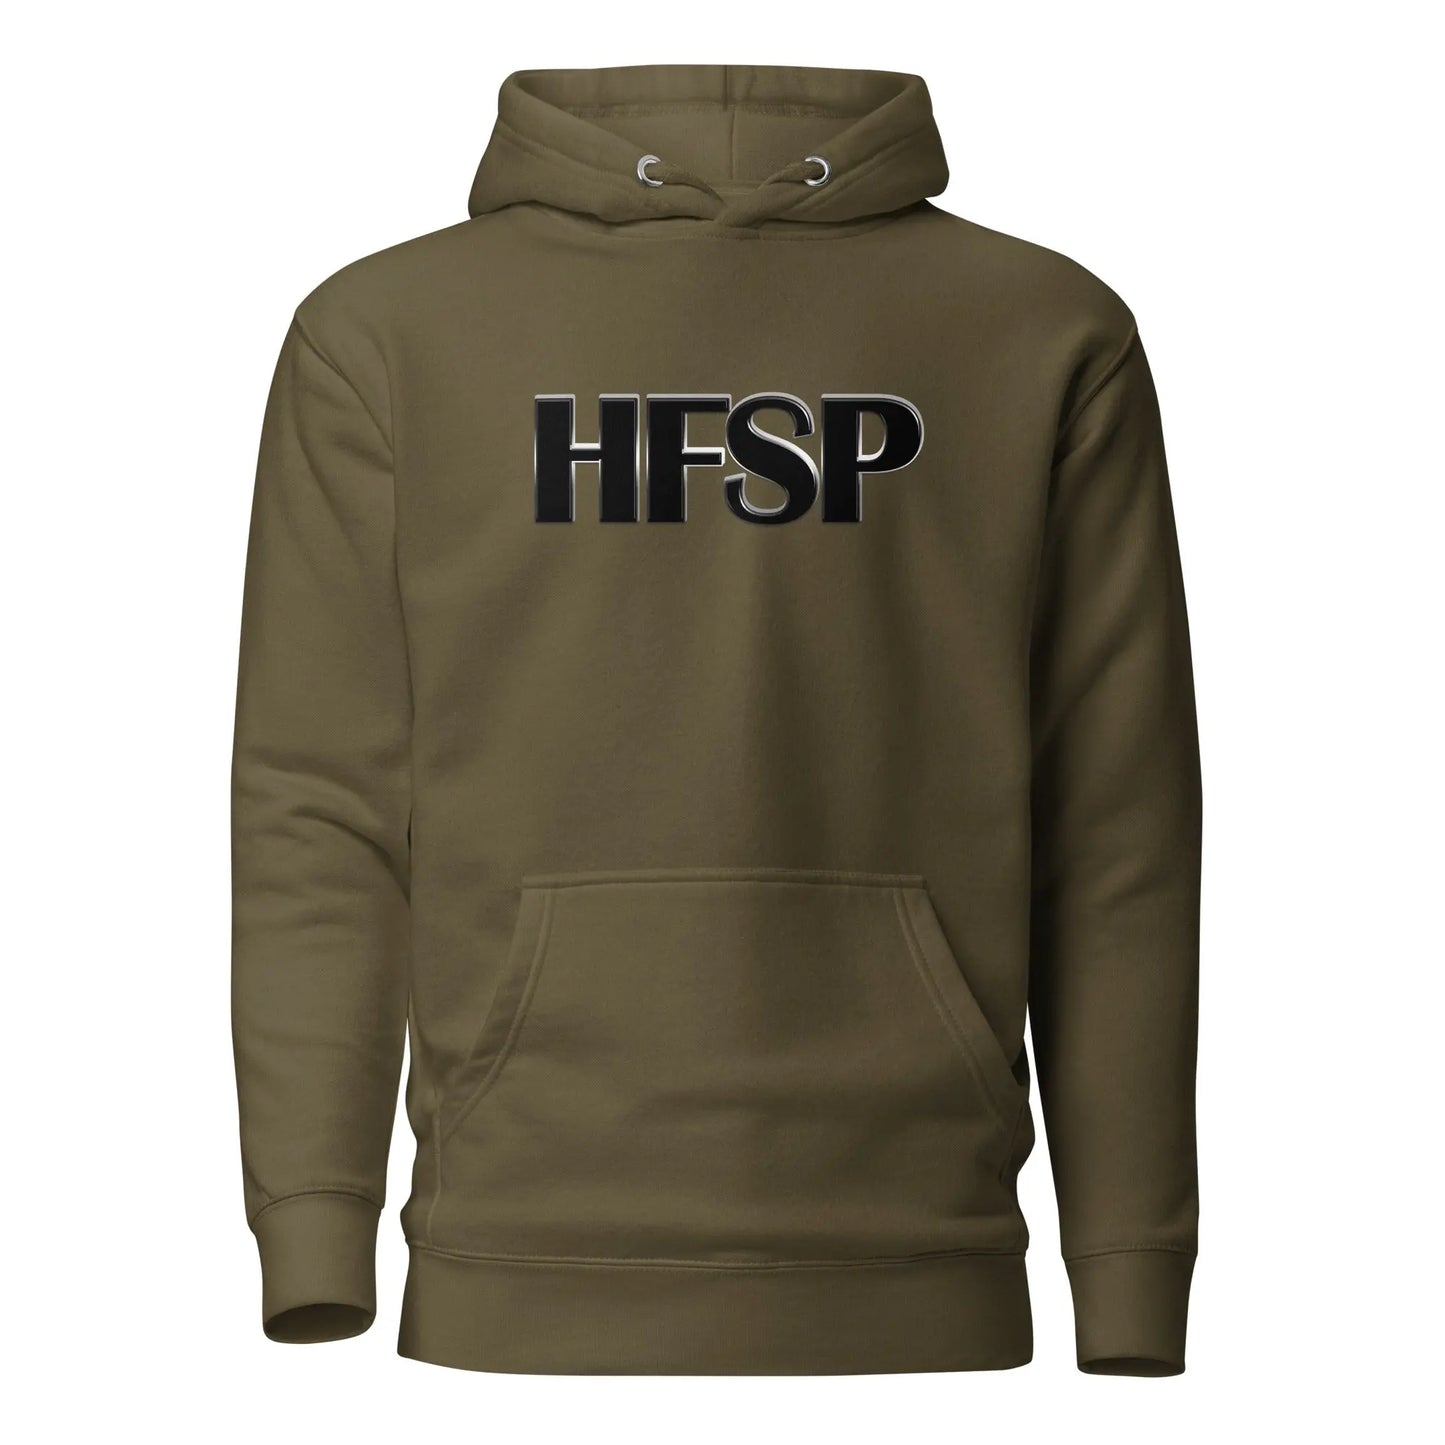 HFSP - Premium Unisex Bitcoin Hoodie Store of Value